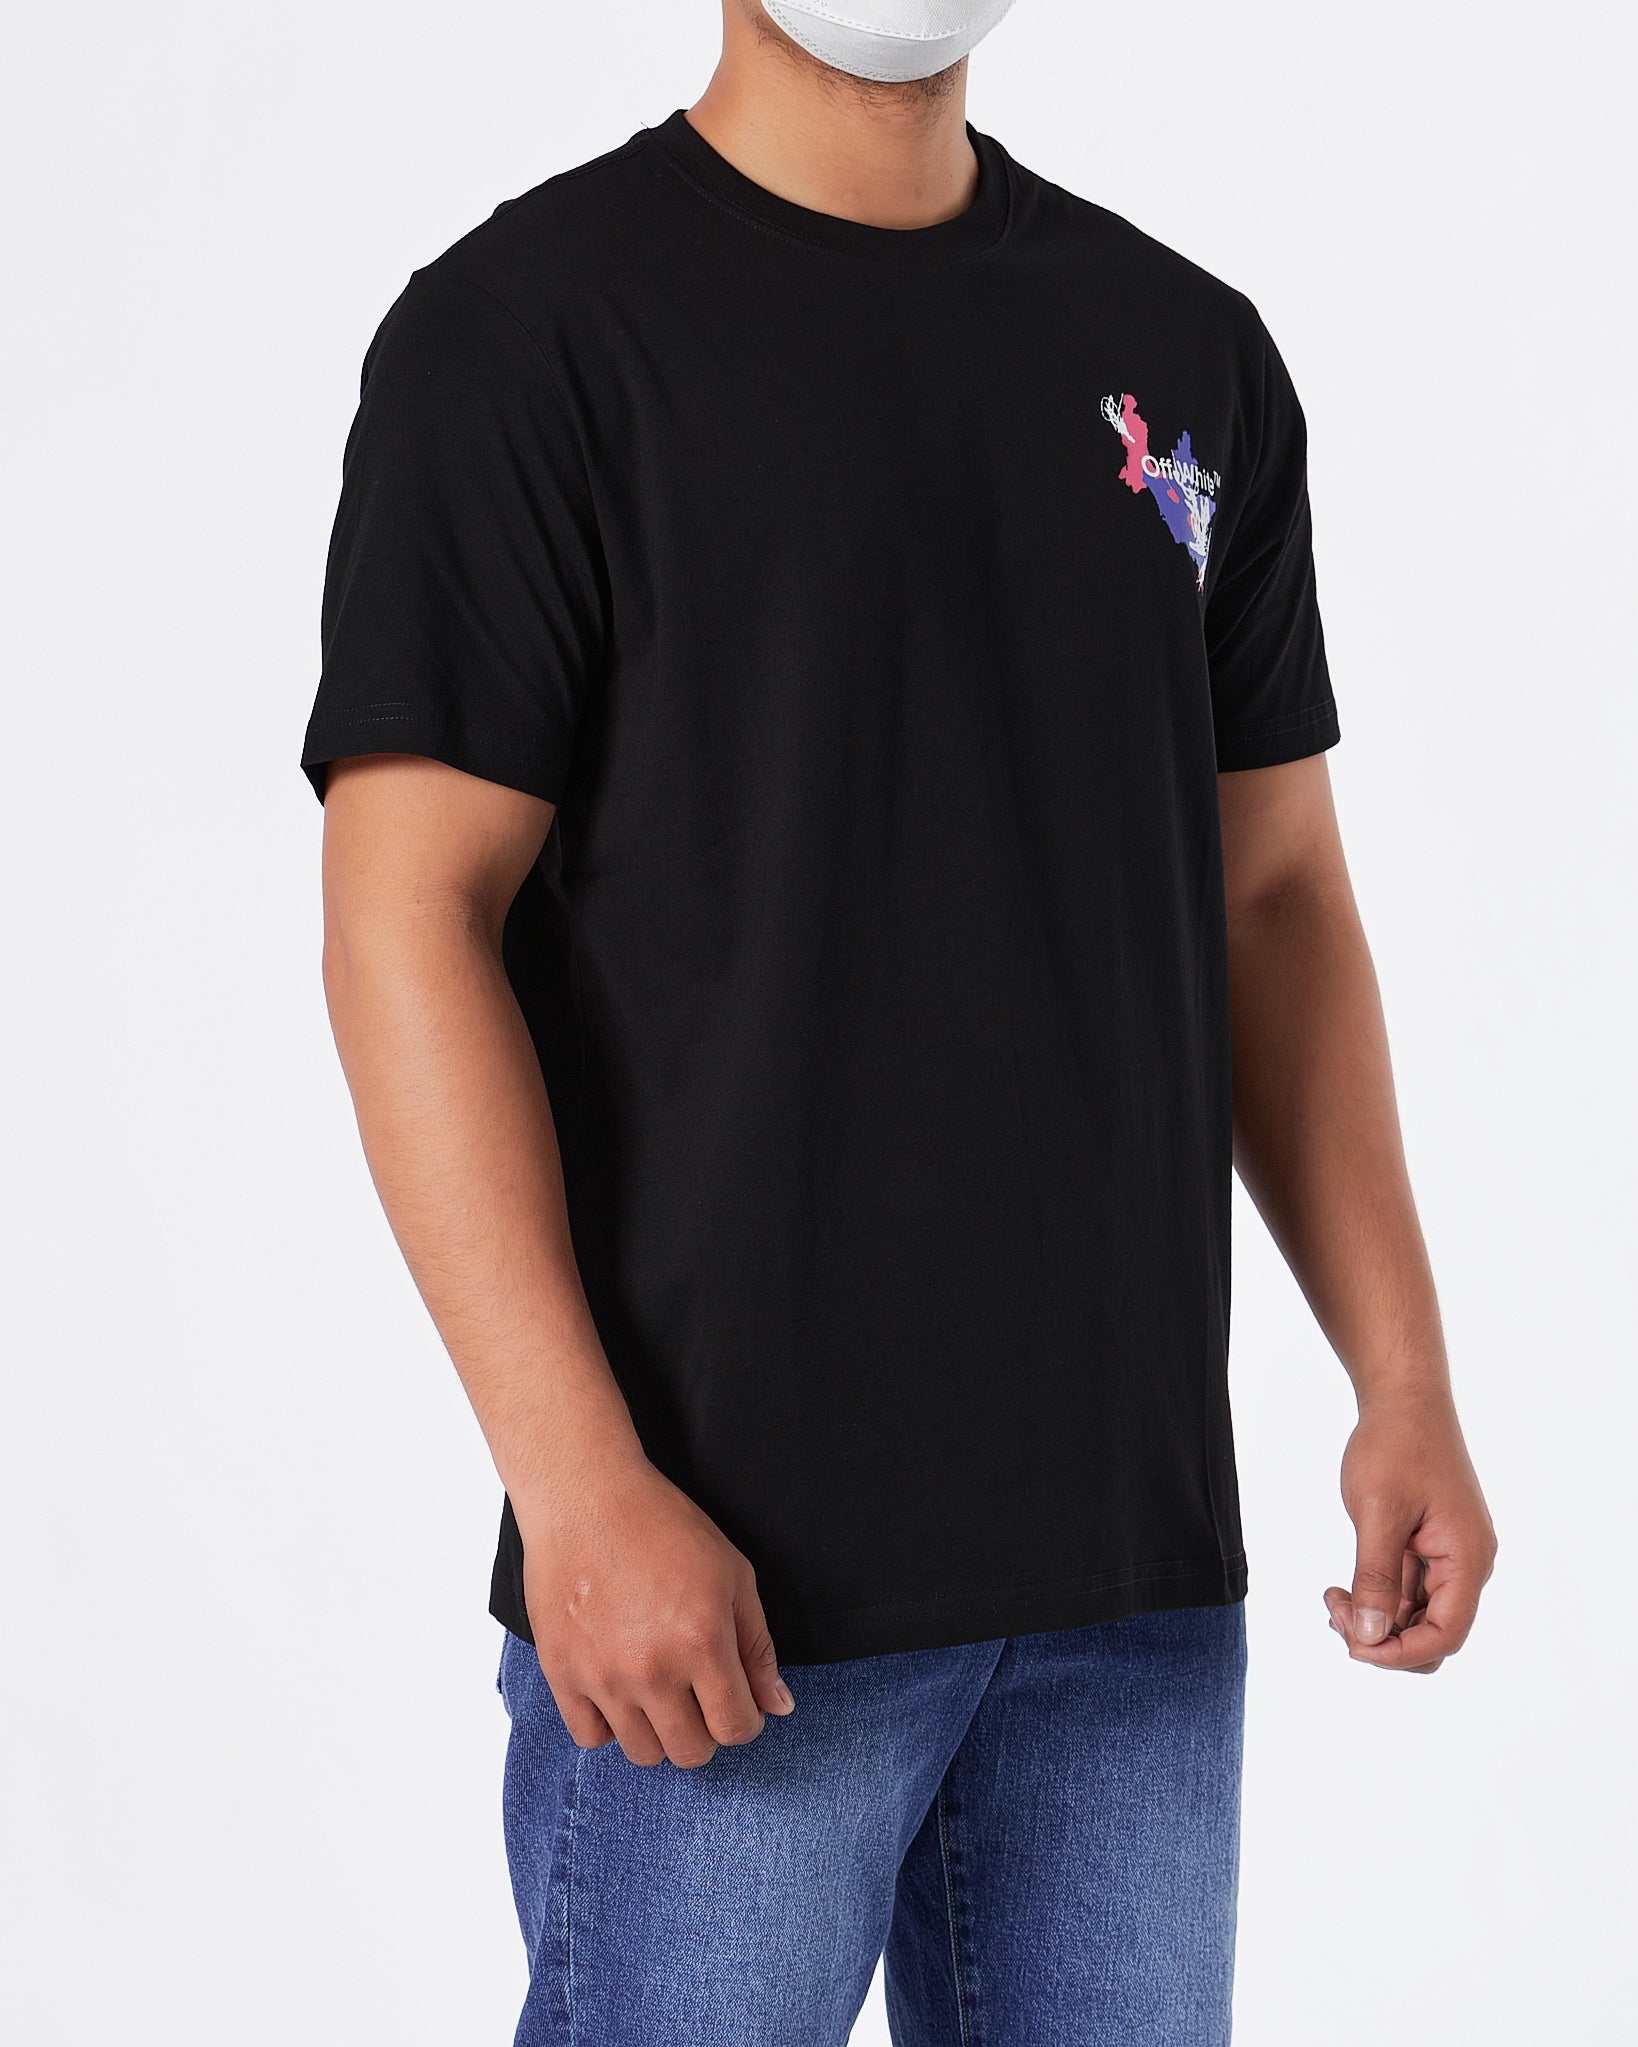 OW Cross Arrow Graffiti Back Printed Men Black T-Shirt 20.90